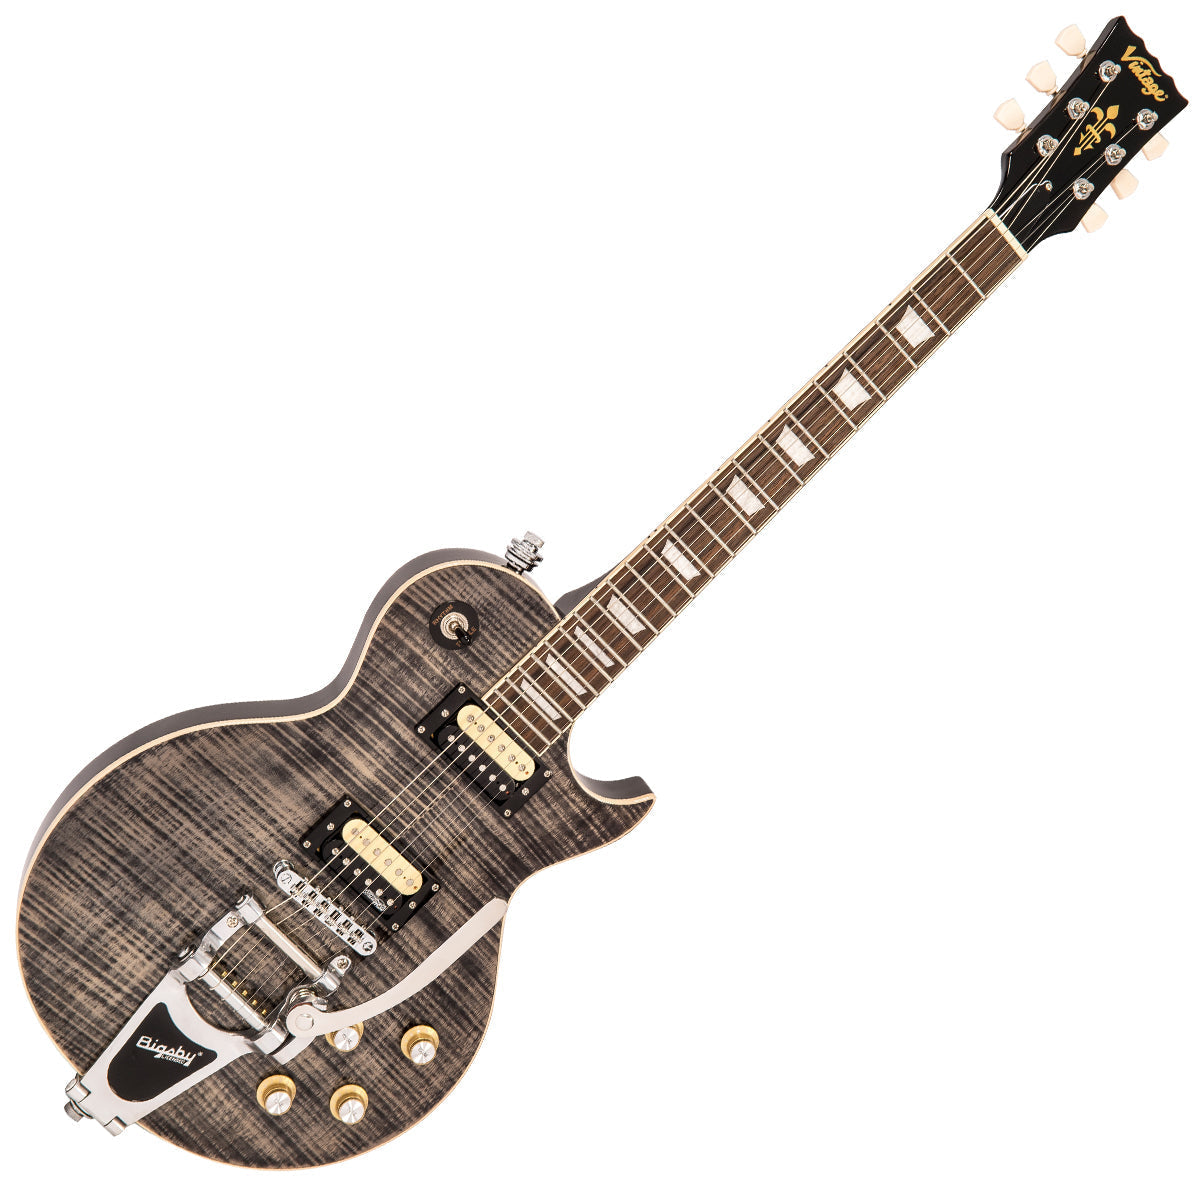 Vintage V100 ReIssued Electric Guitar w/Bigsby ~ Flamed Thru Black, Electric Guitar for sale at Richards Guitars.